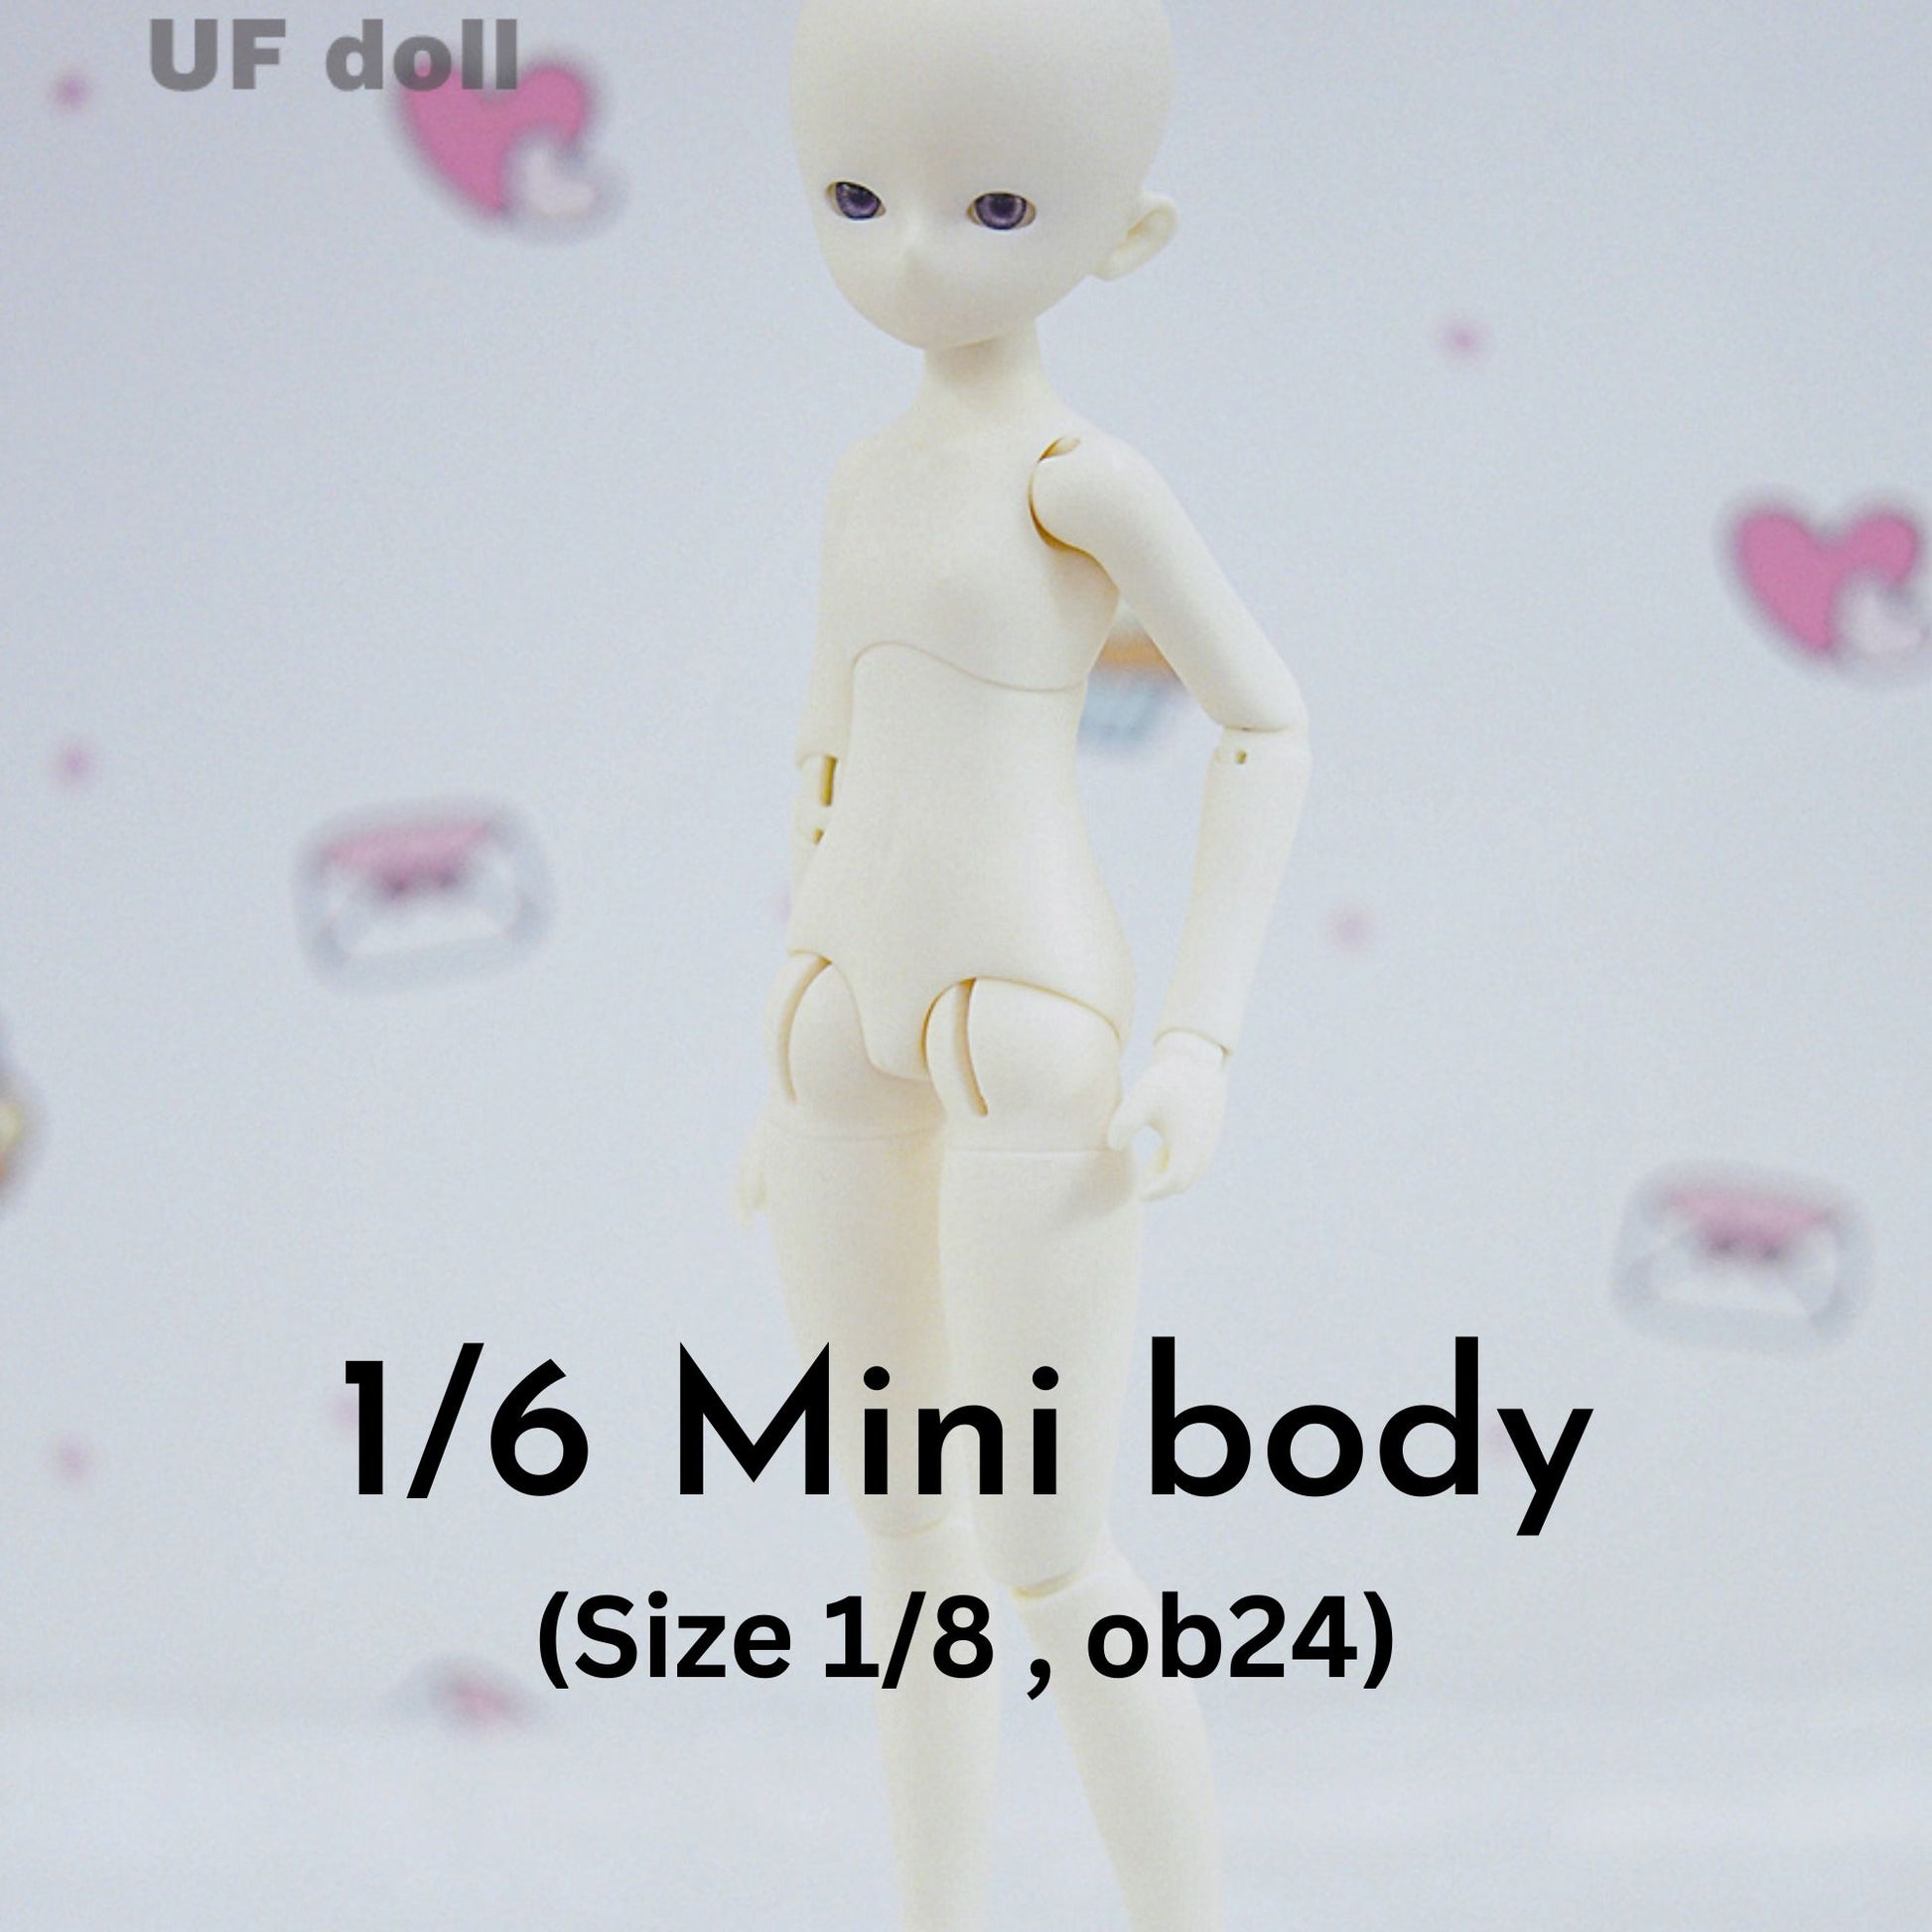 UFDoll 1/6 Mini Body : Instock - Anubis Doll Café